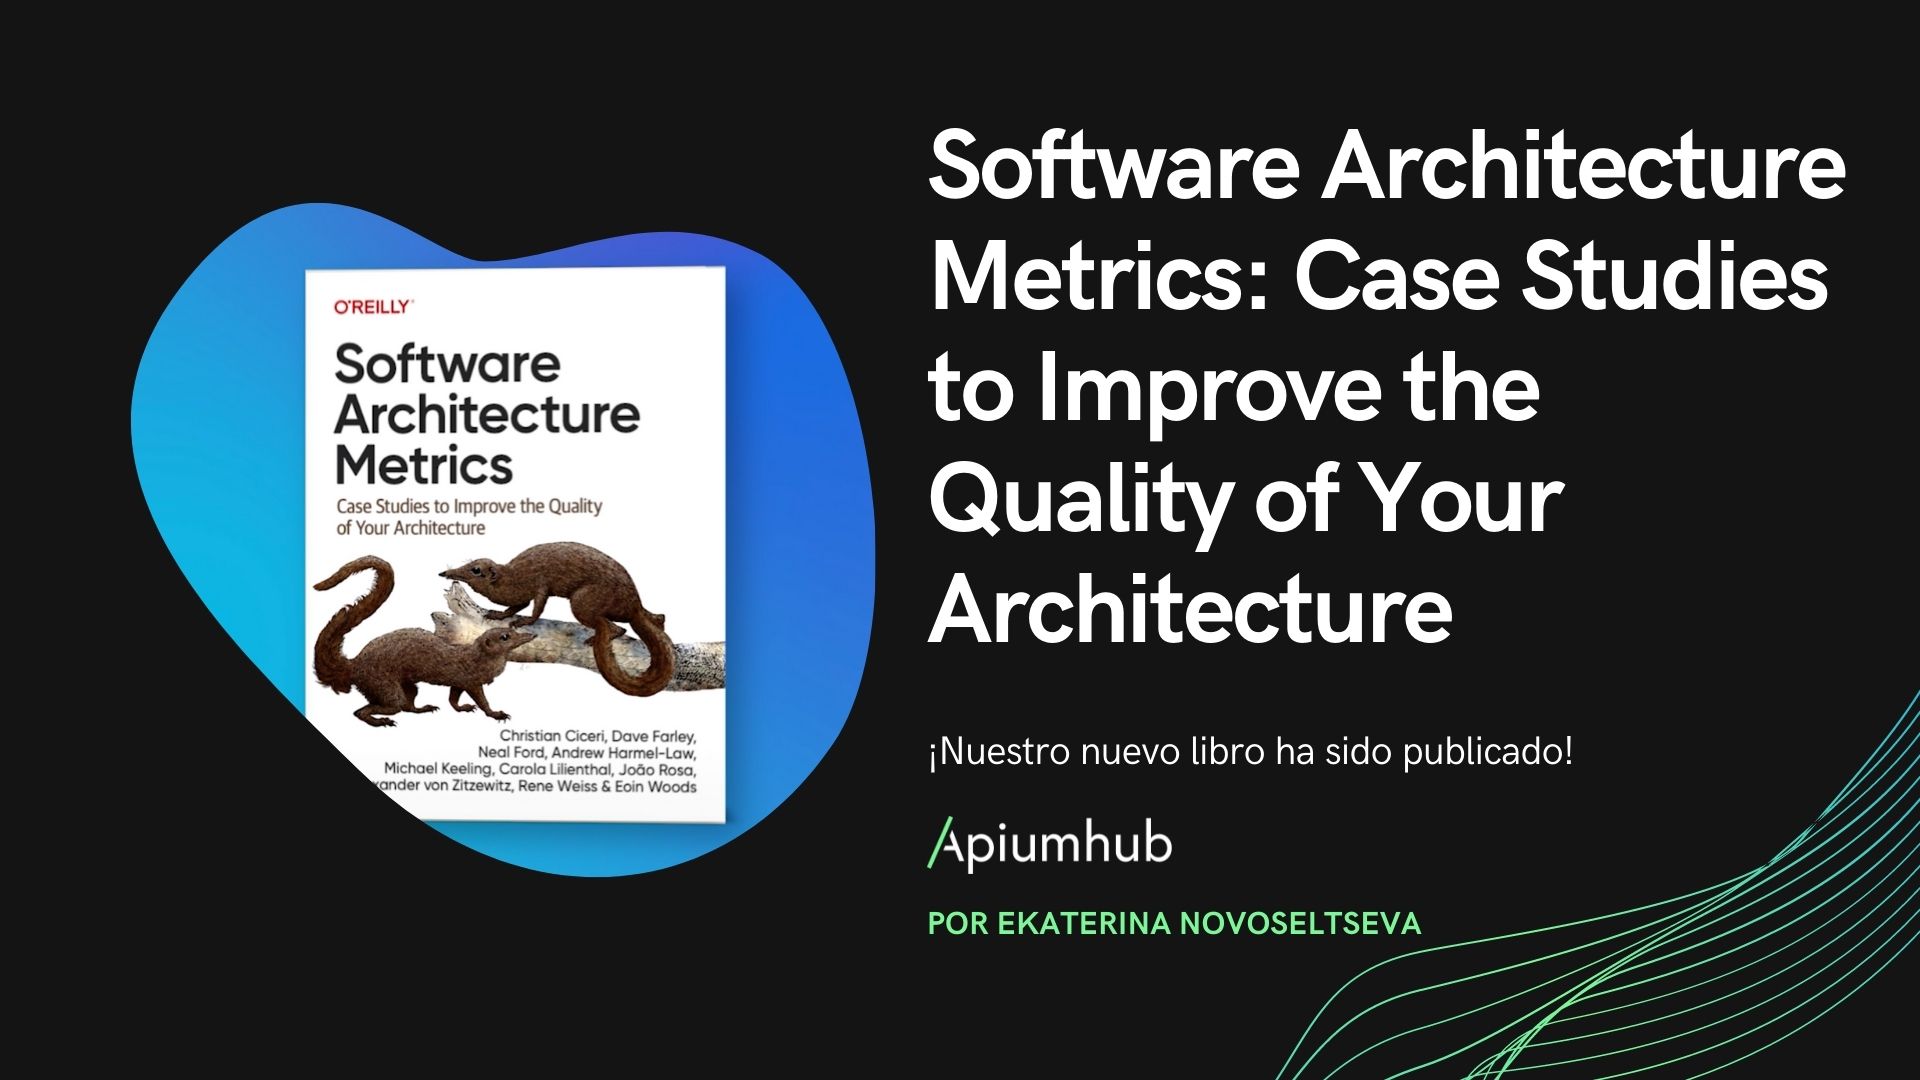 Nuestro libro "Software Architecture Metrics: Case Studies to Improve the Quality of Your Architecture" ha sido publicado.